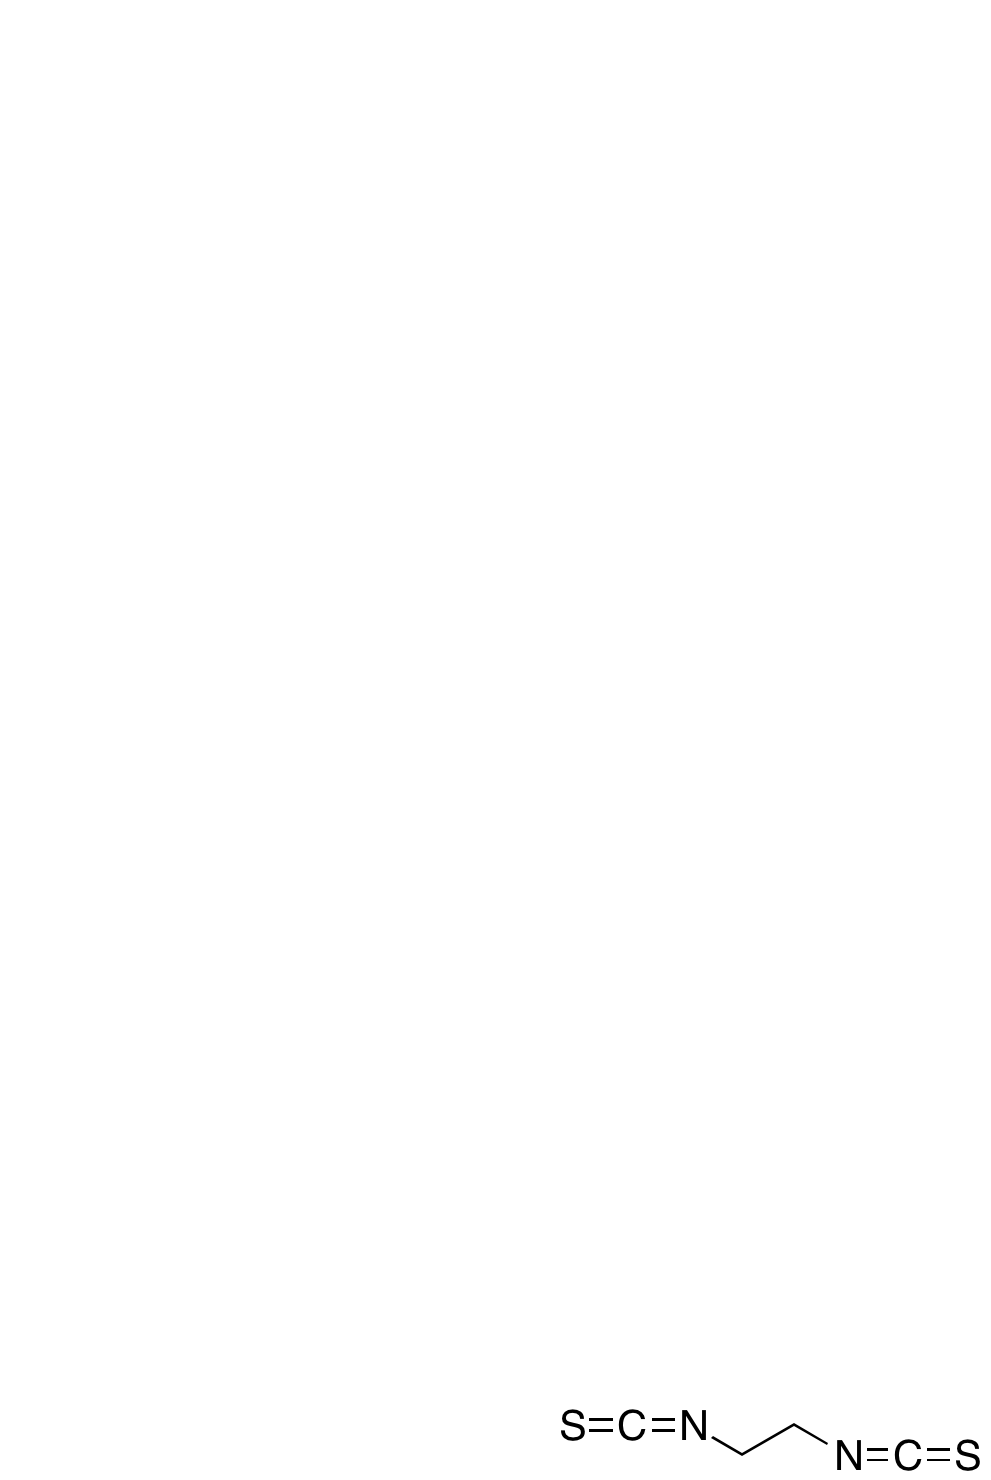 Ethylenebis(isothiocyanate)